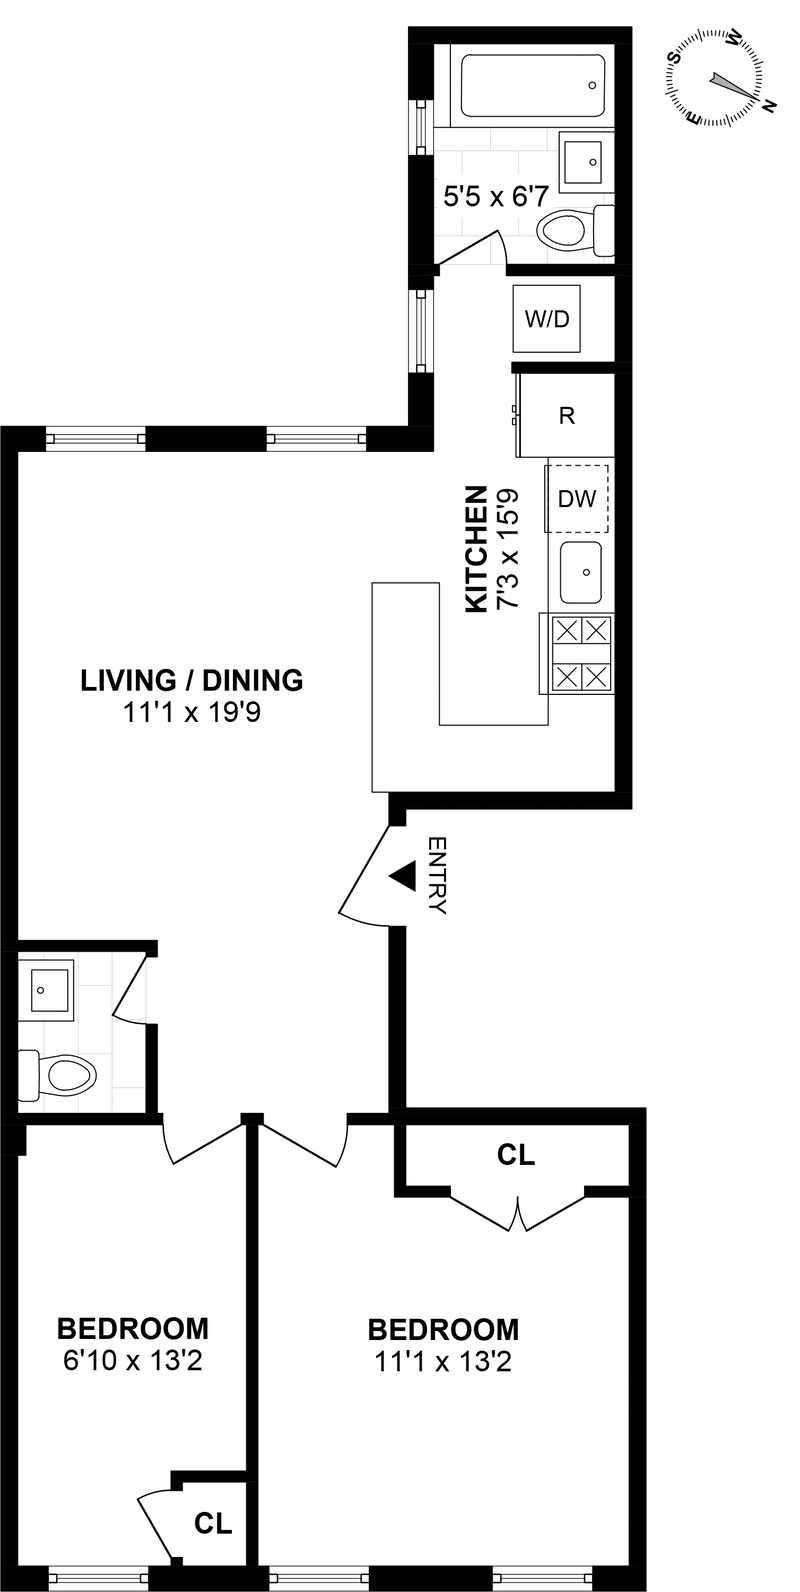 Floorplan for 44 Woodhull Street